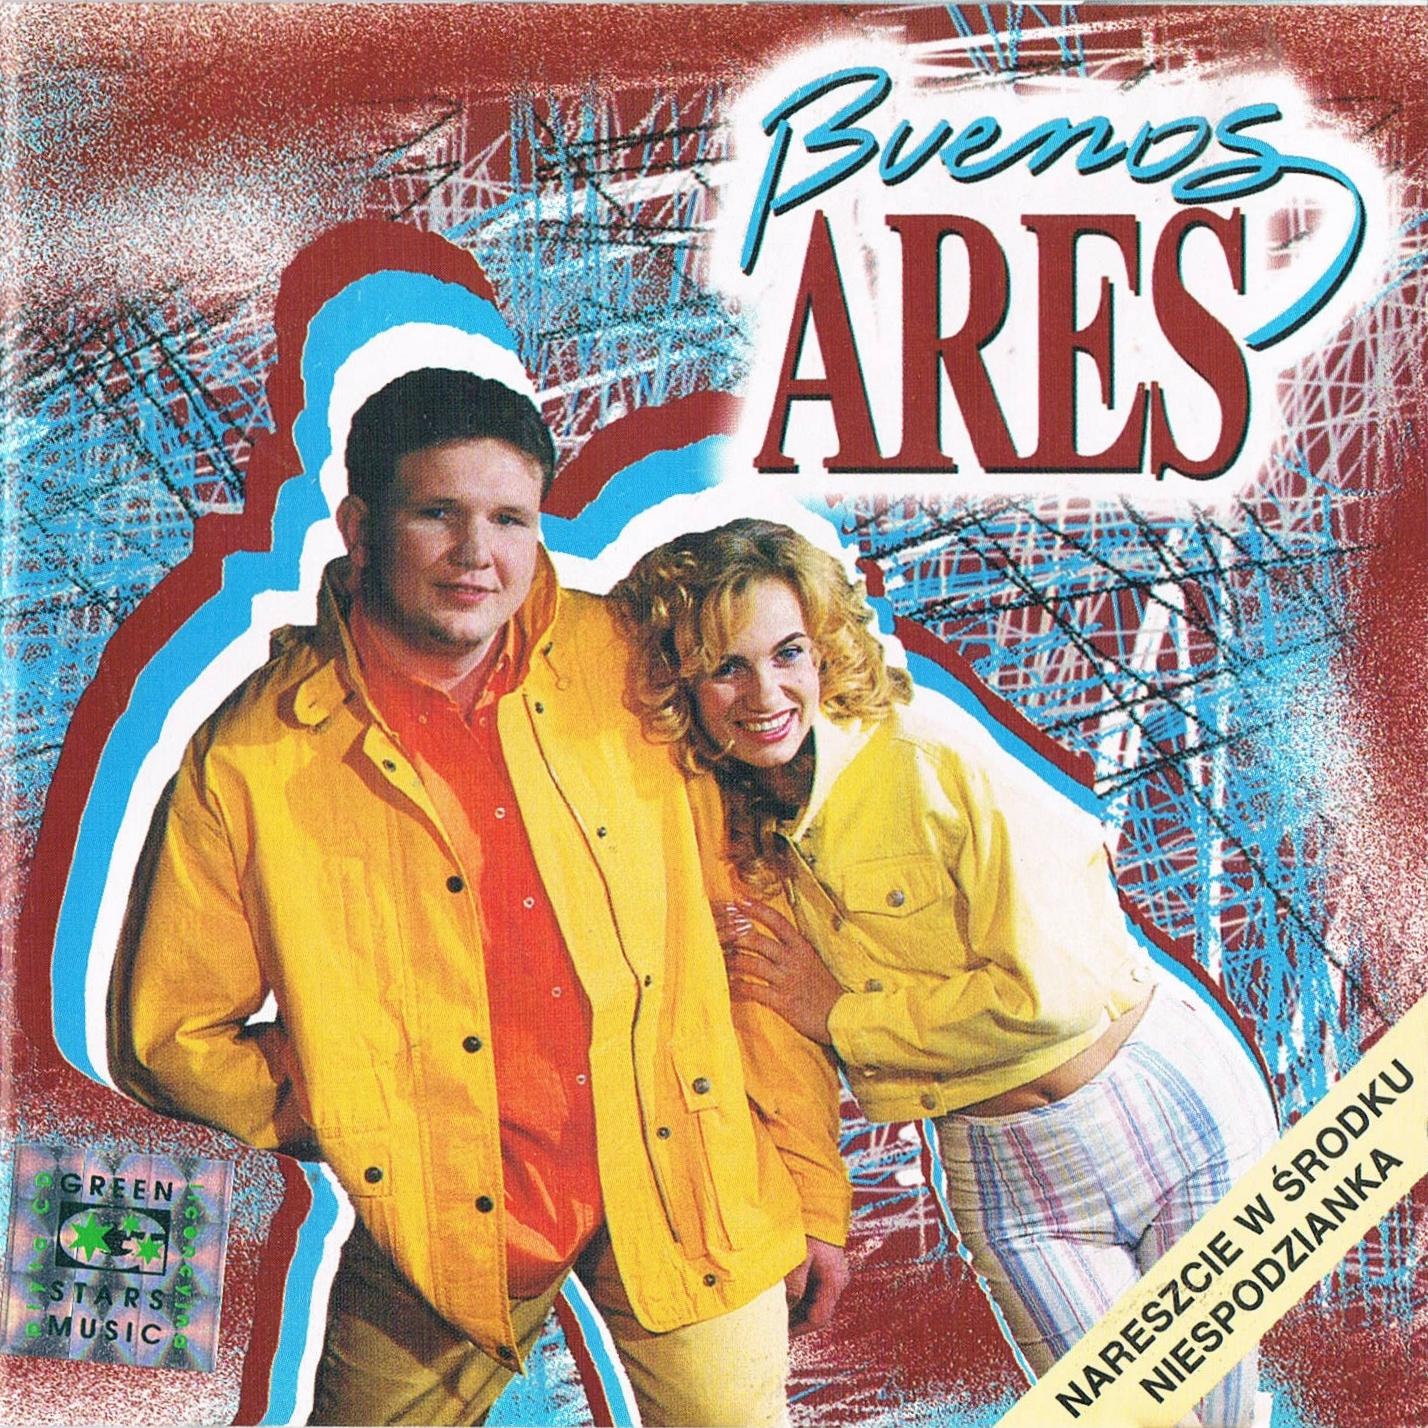 Buenos Ares - Buenos Ares